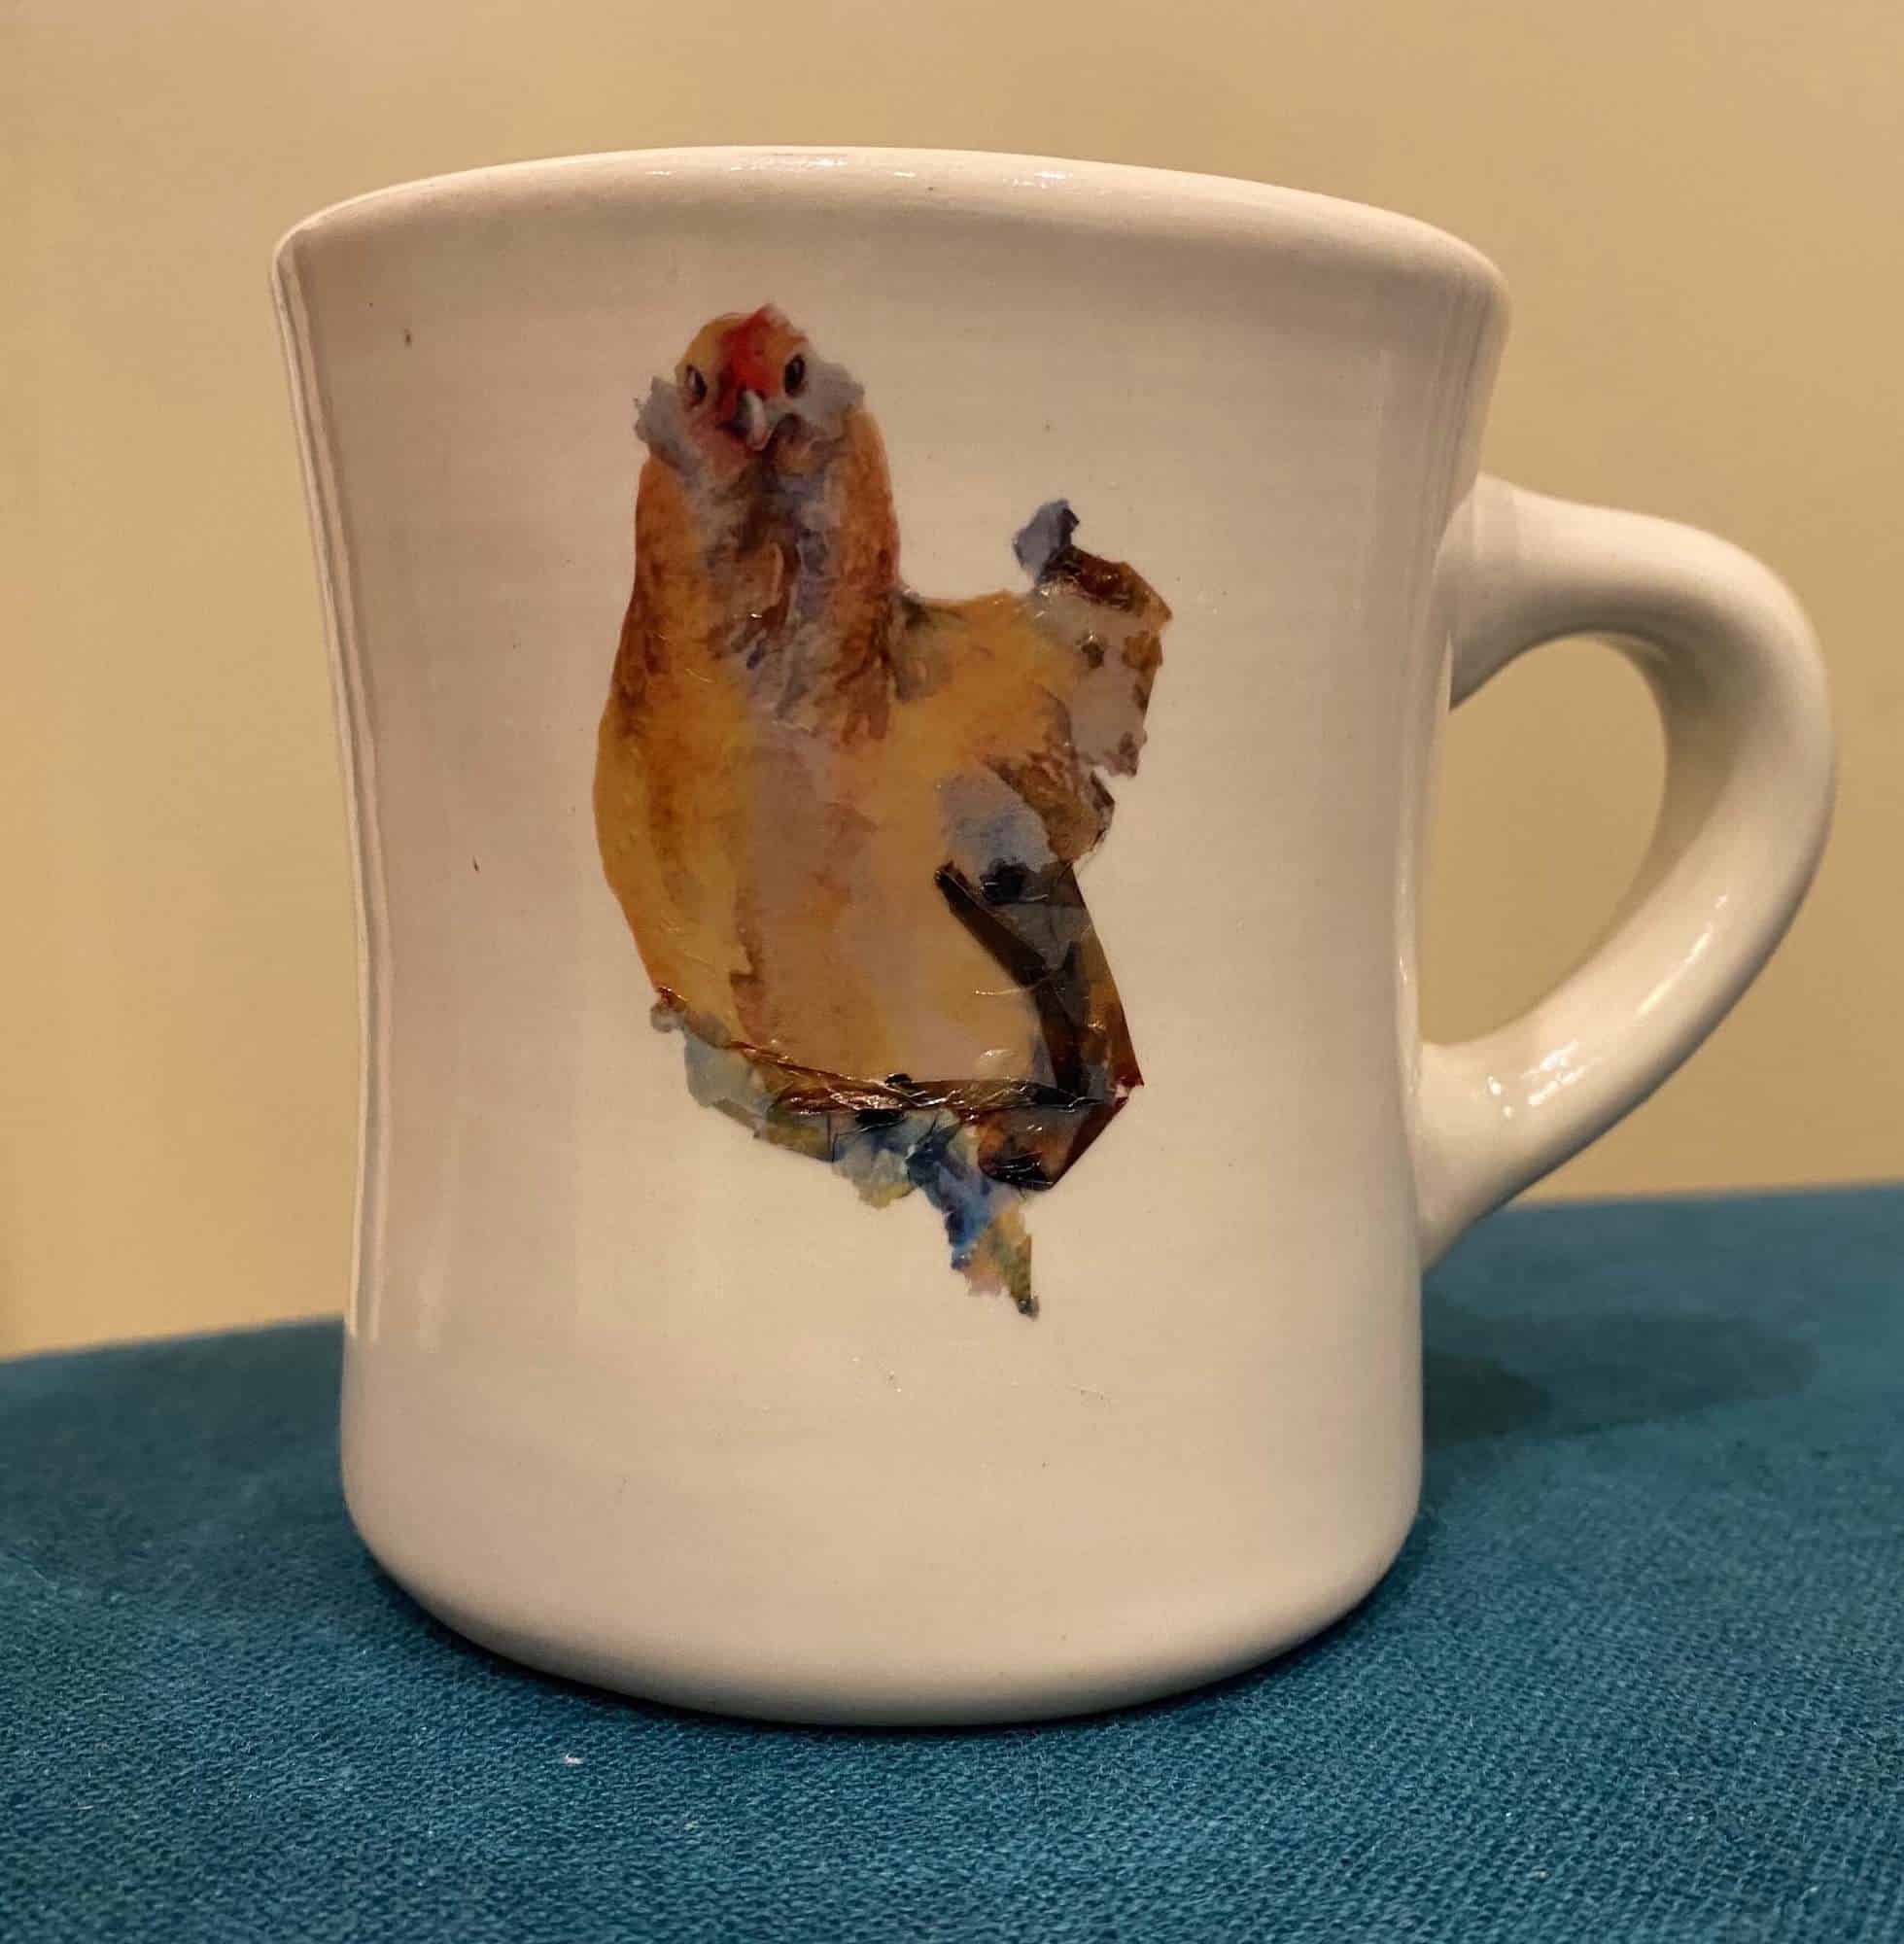 waterslide decal mug destroyed by dishwasher